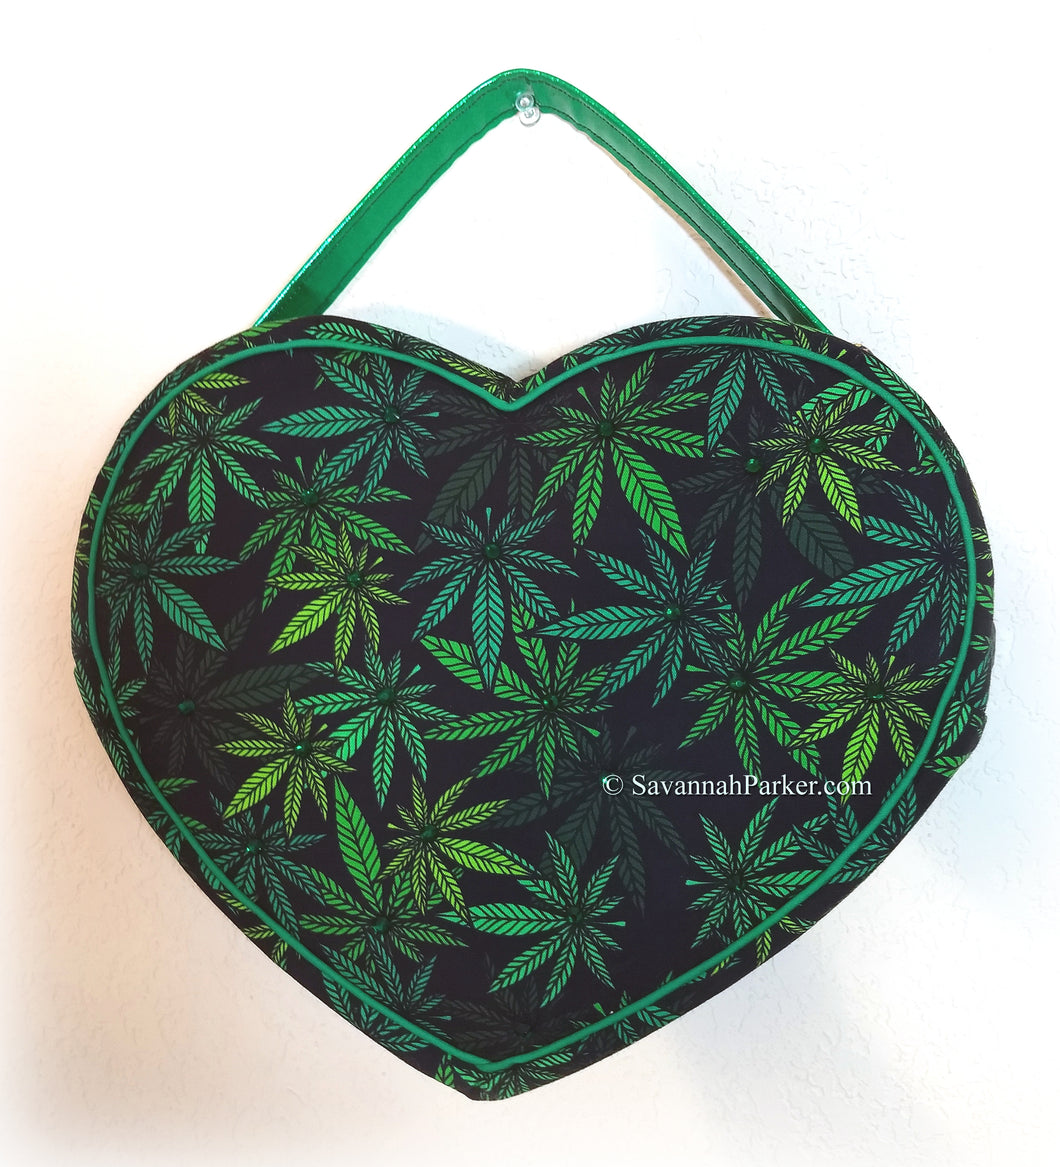 SOLD AMAZING Emerald Cannabis Green Black Retro Heart Shaped Purse Handbag, Handsewn Piping and Binding, Jeweled Detachable Strap, Jewel Charms